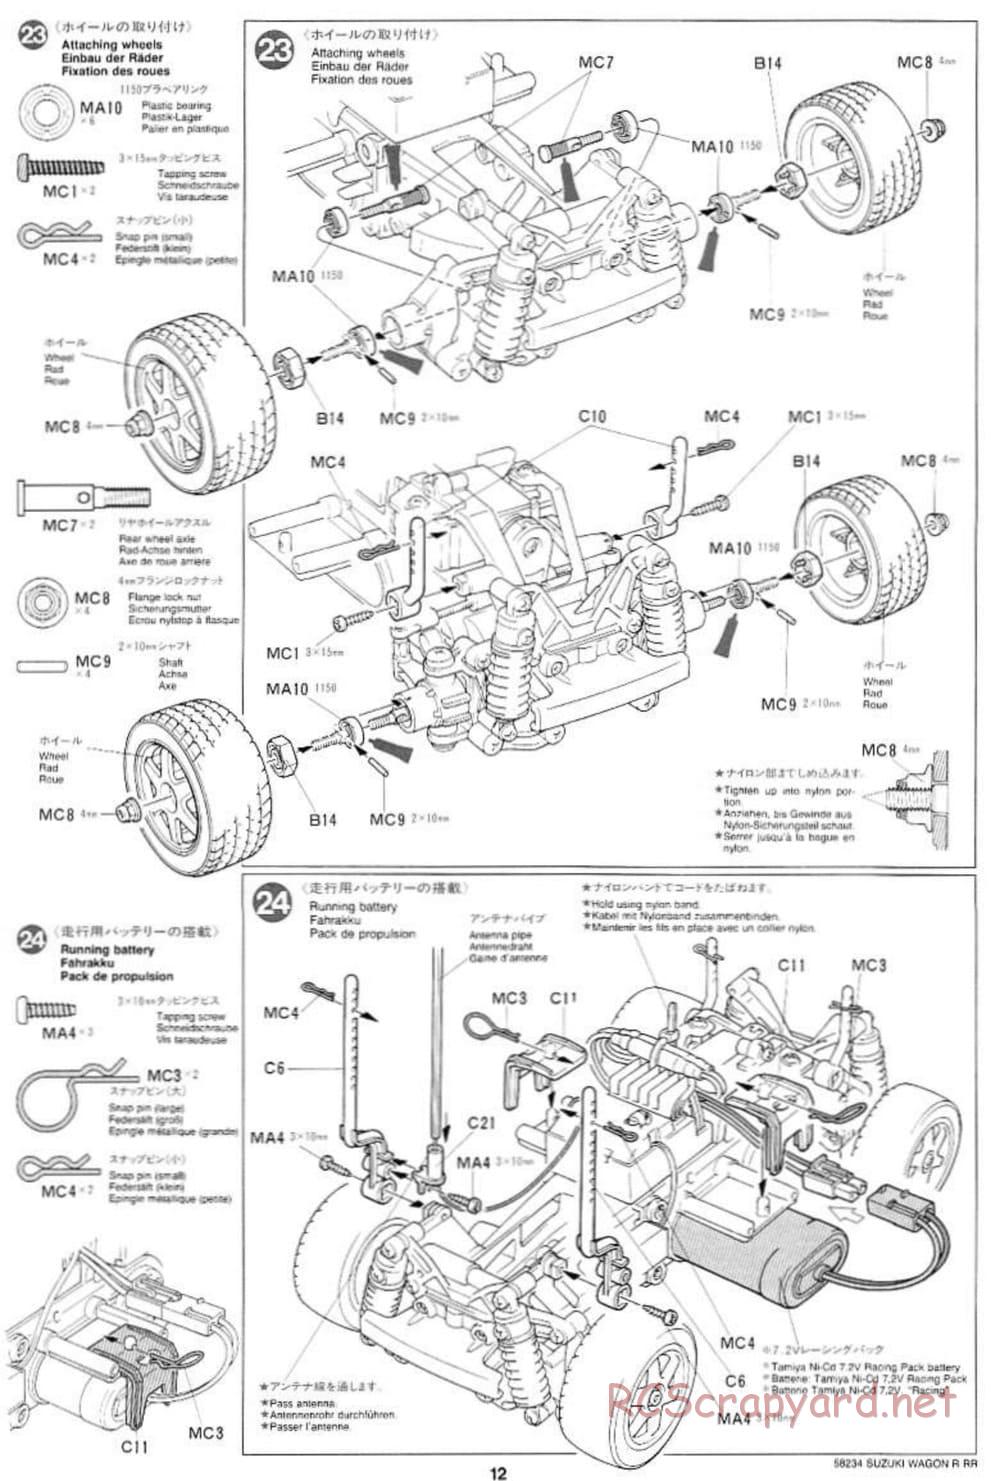 Tamiya - Suzuki WagonR-RR - M03 Chassis - Manual - Page 12